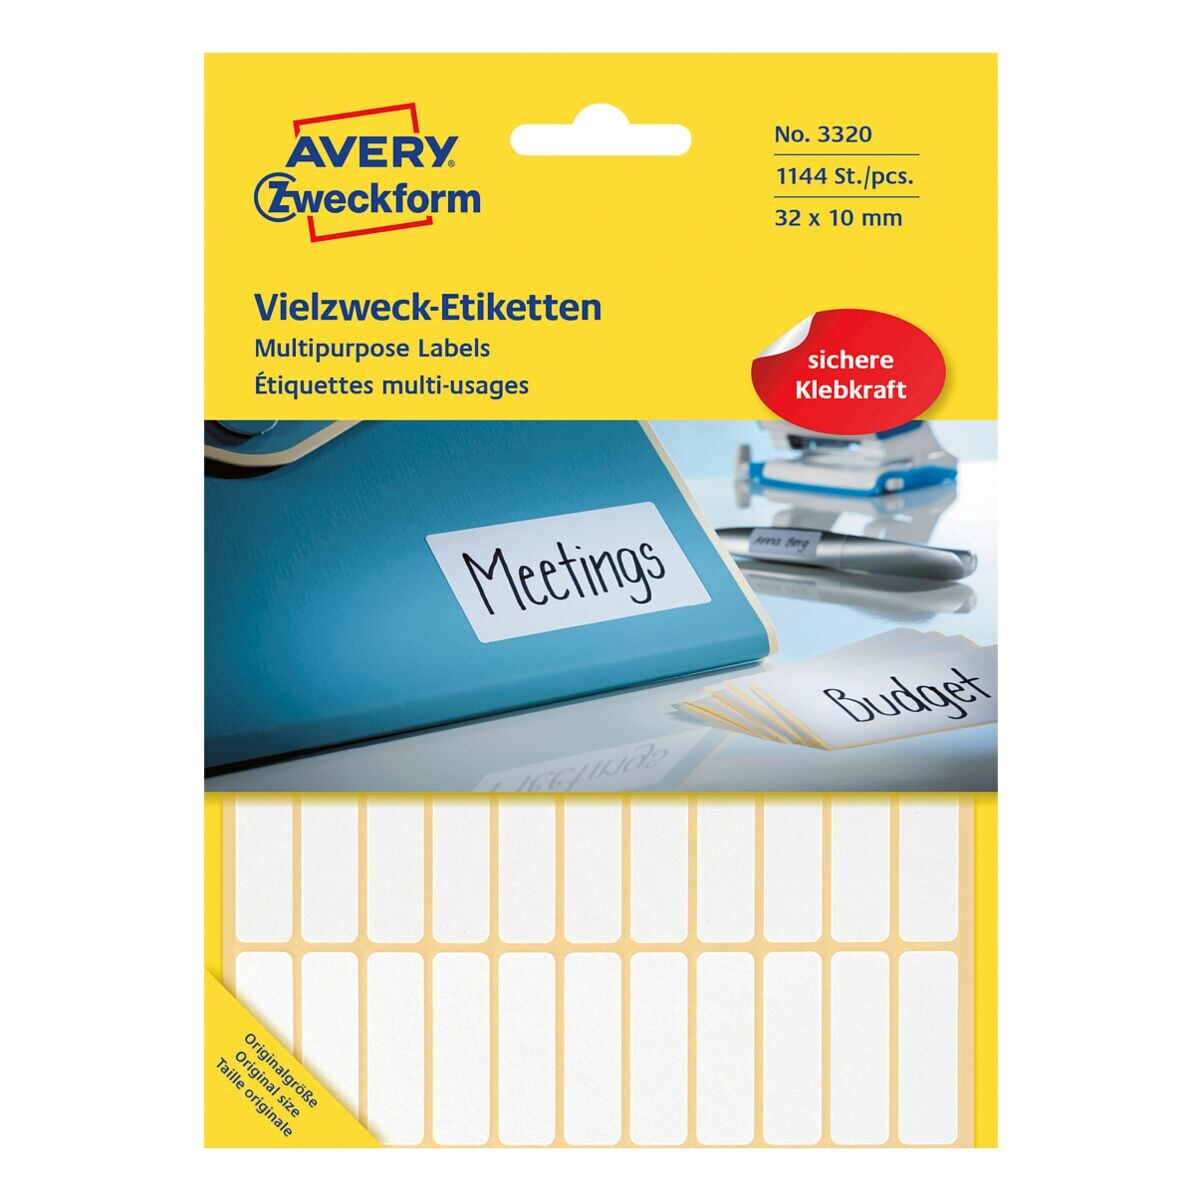 Avery Zweckform Pak van 1144 multifunctionele etiketten 3320